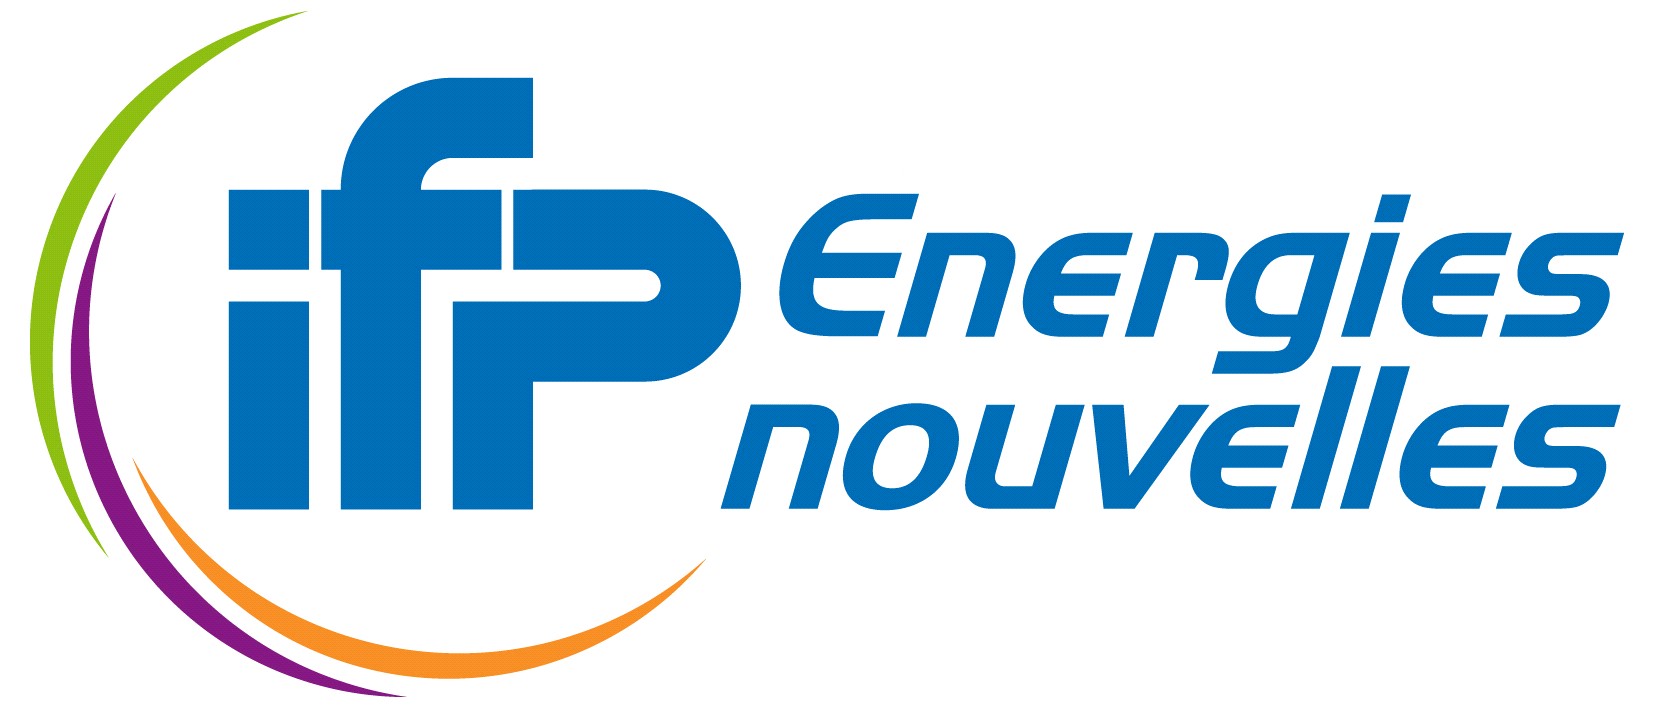 IFP Energies nouvelles - IFPEN